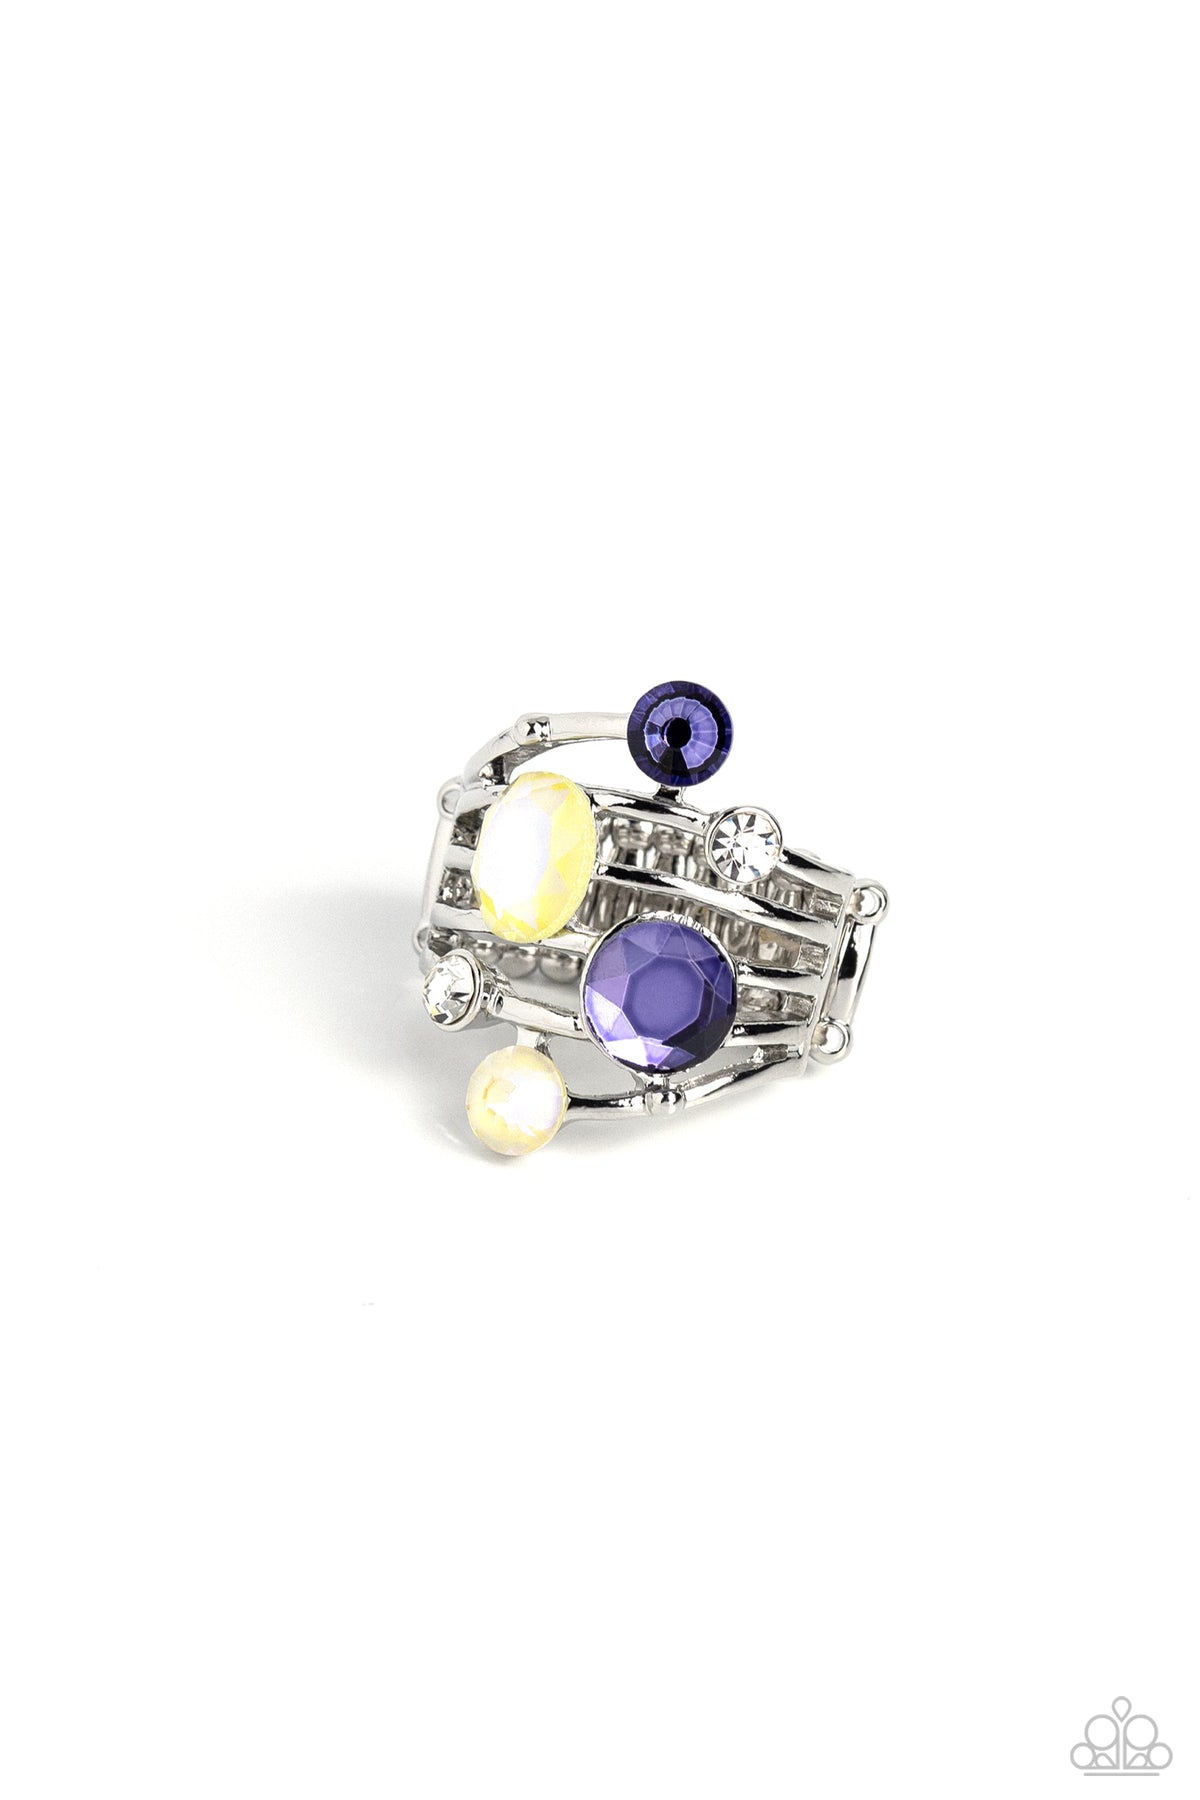 Timeless Trickle Purple Rhinestone Ring - Paparazzi Accessories- lightbox - CarasShop.com - $5 Jewelry by Cara Jewels